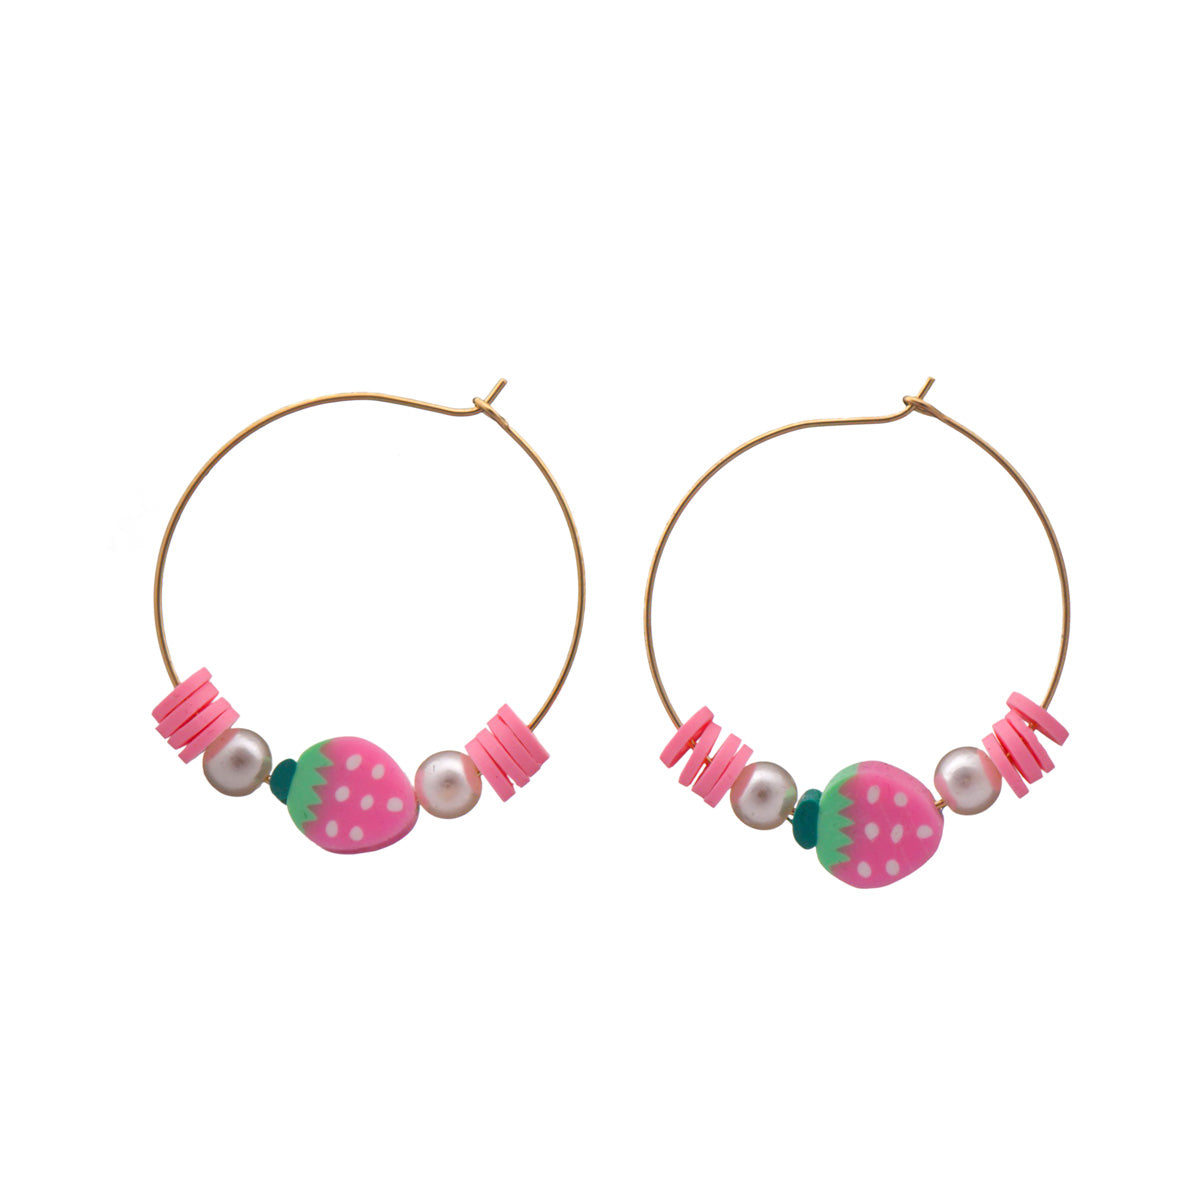 Strawberry ring earrings